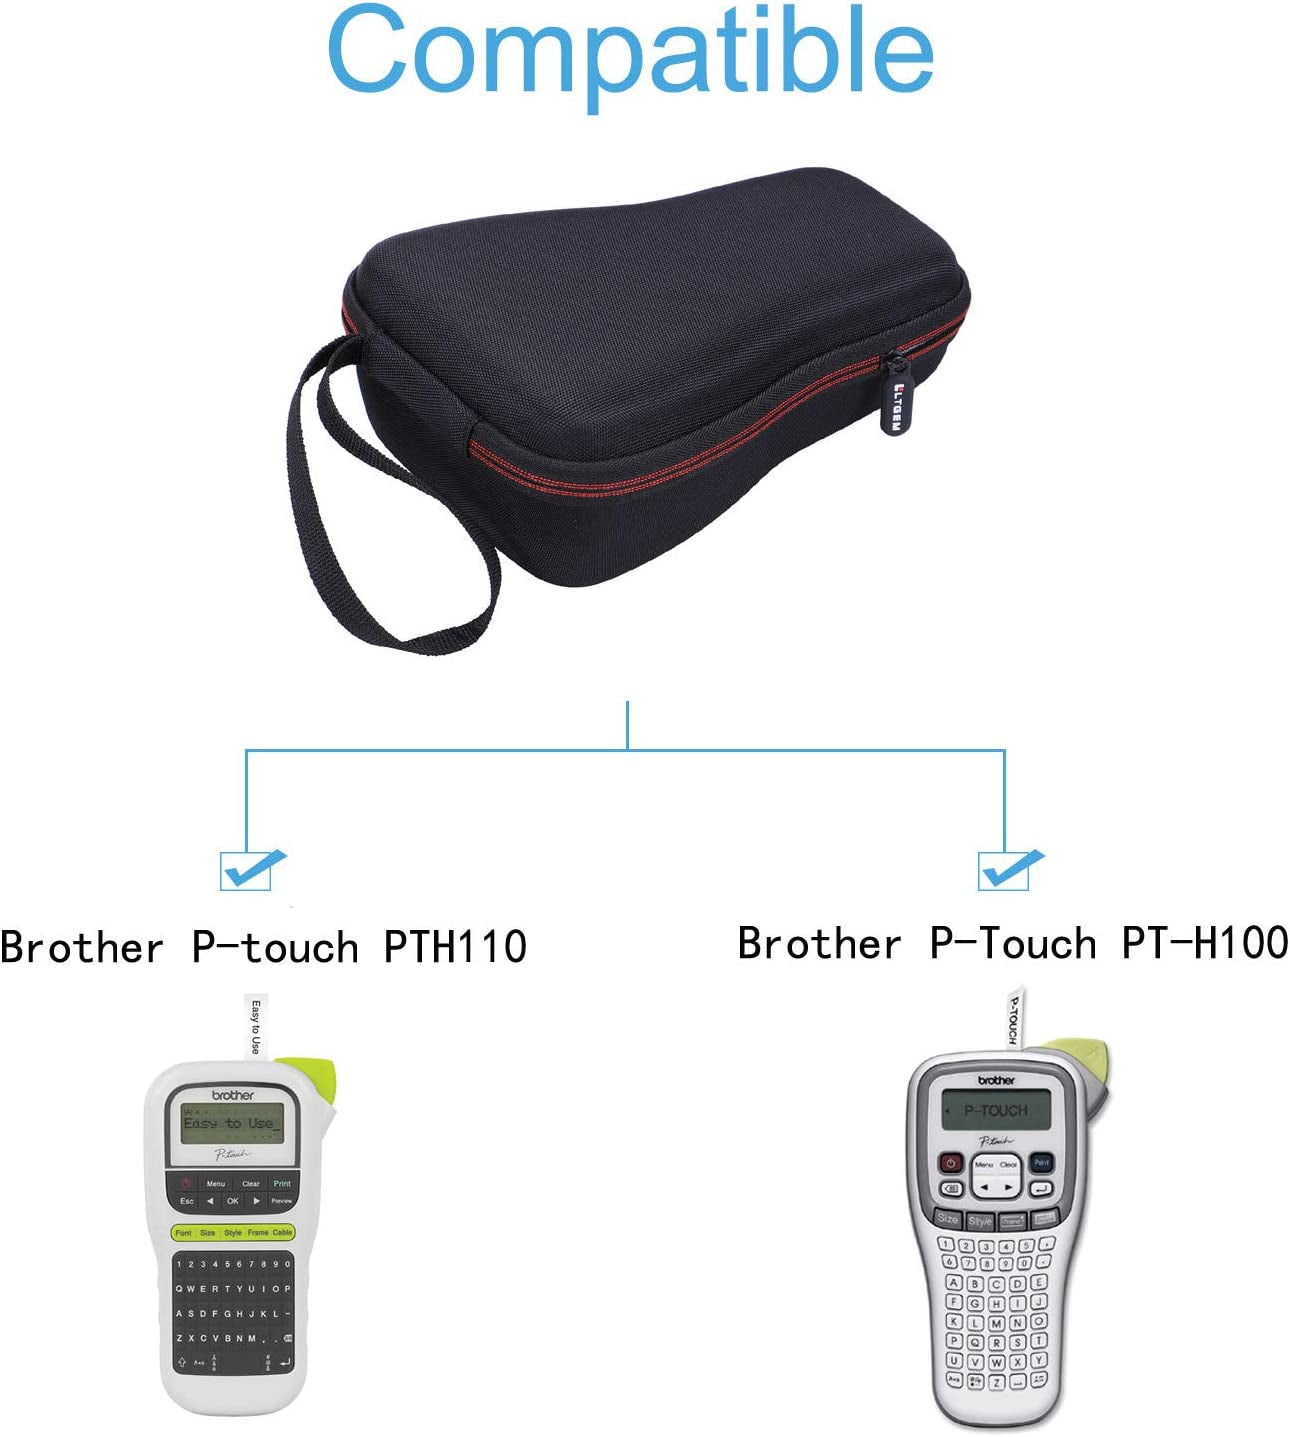 EVA Hard Case for Brother P-Touch Pth110/Pro PT-H111/PT-H100 Easy Portable Label Maker